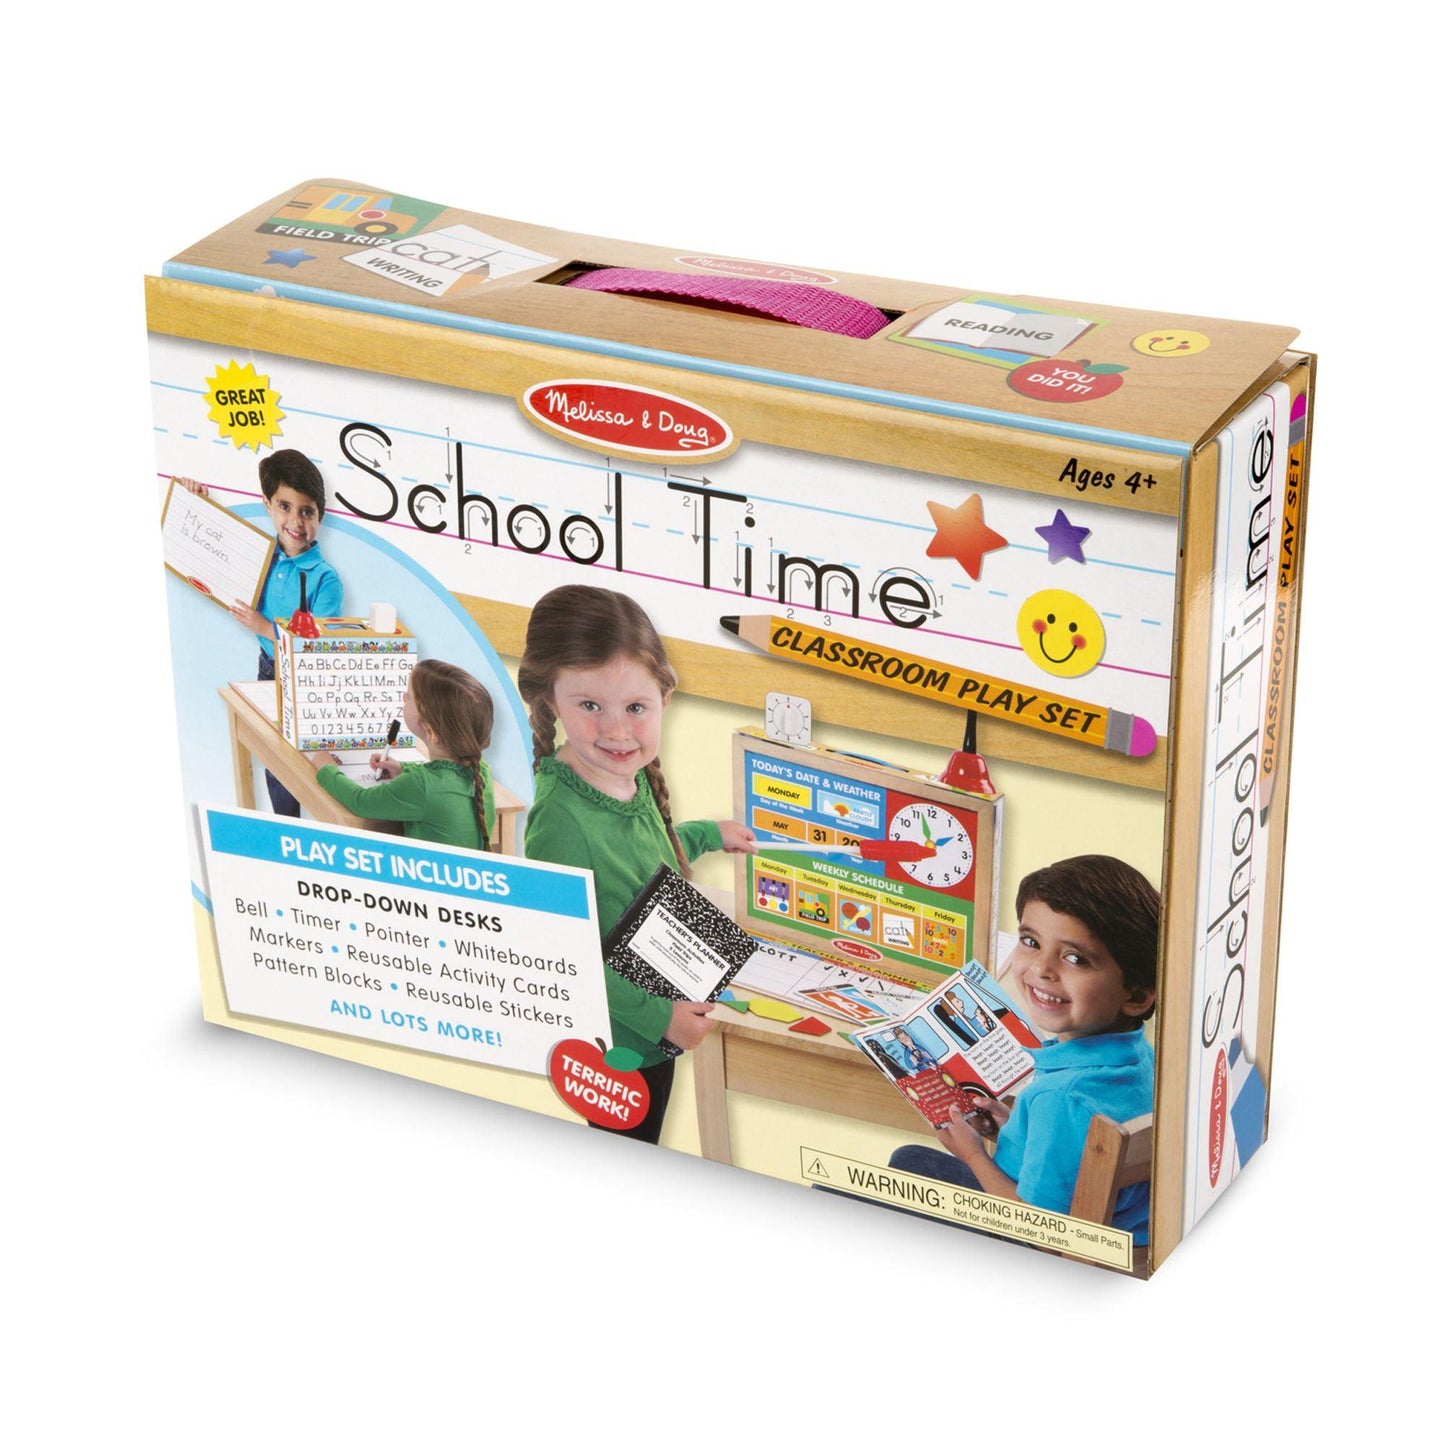 School Time! Classroom Play Set - Loomini